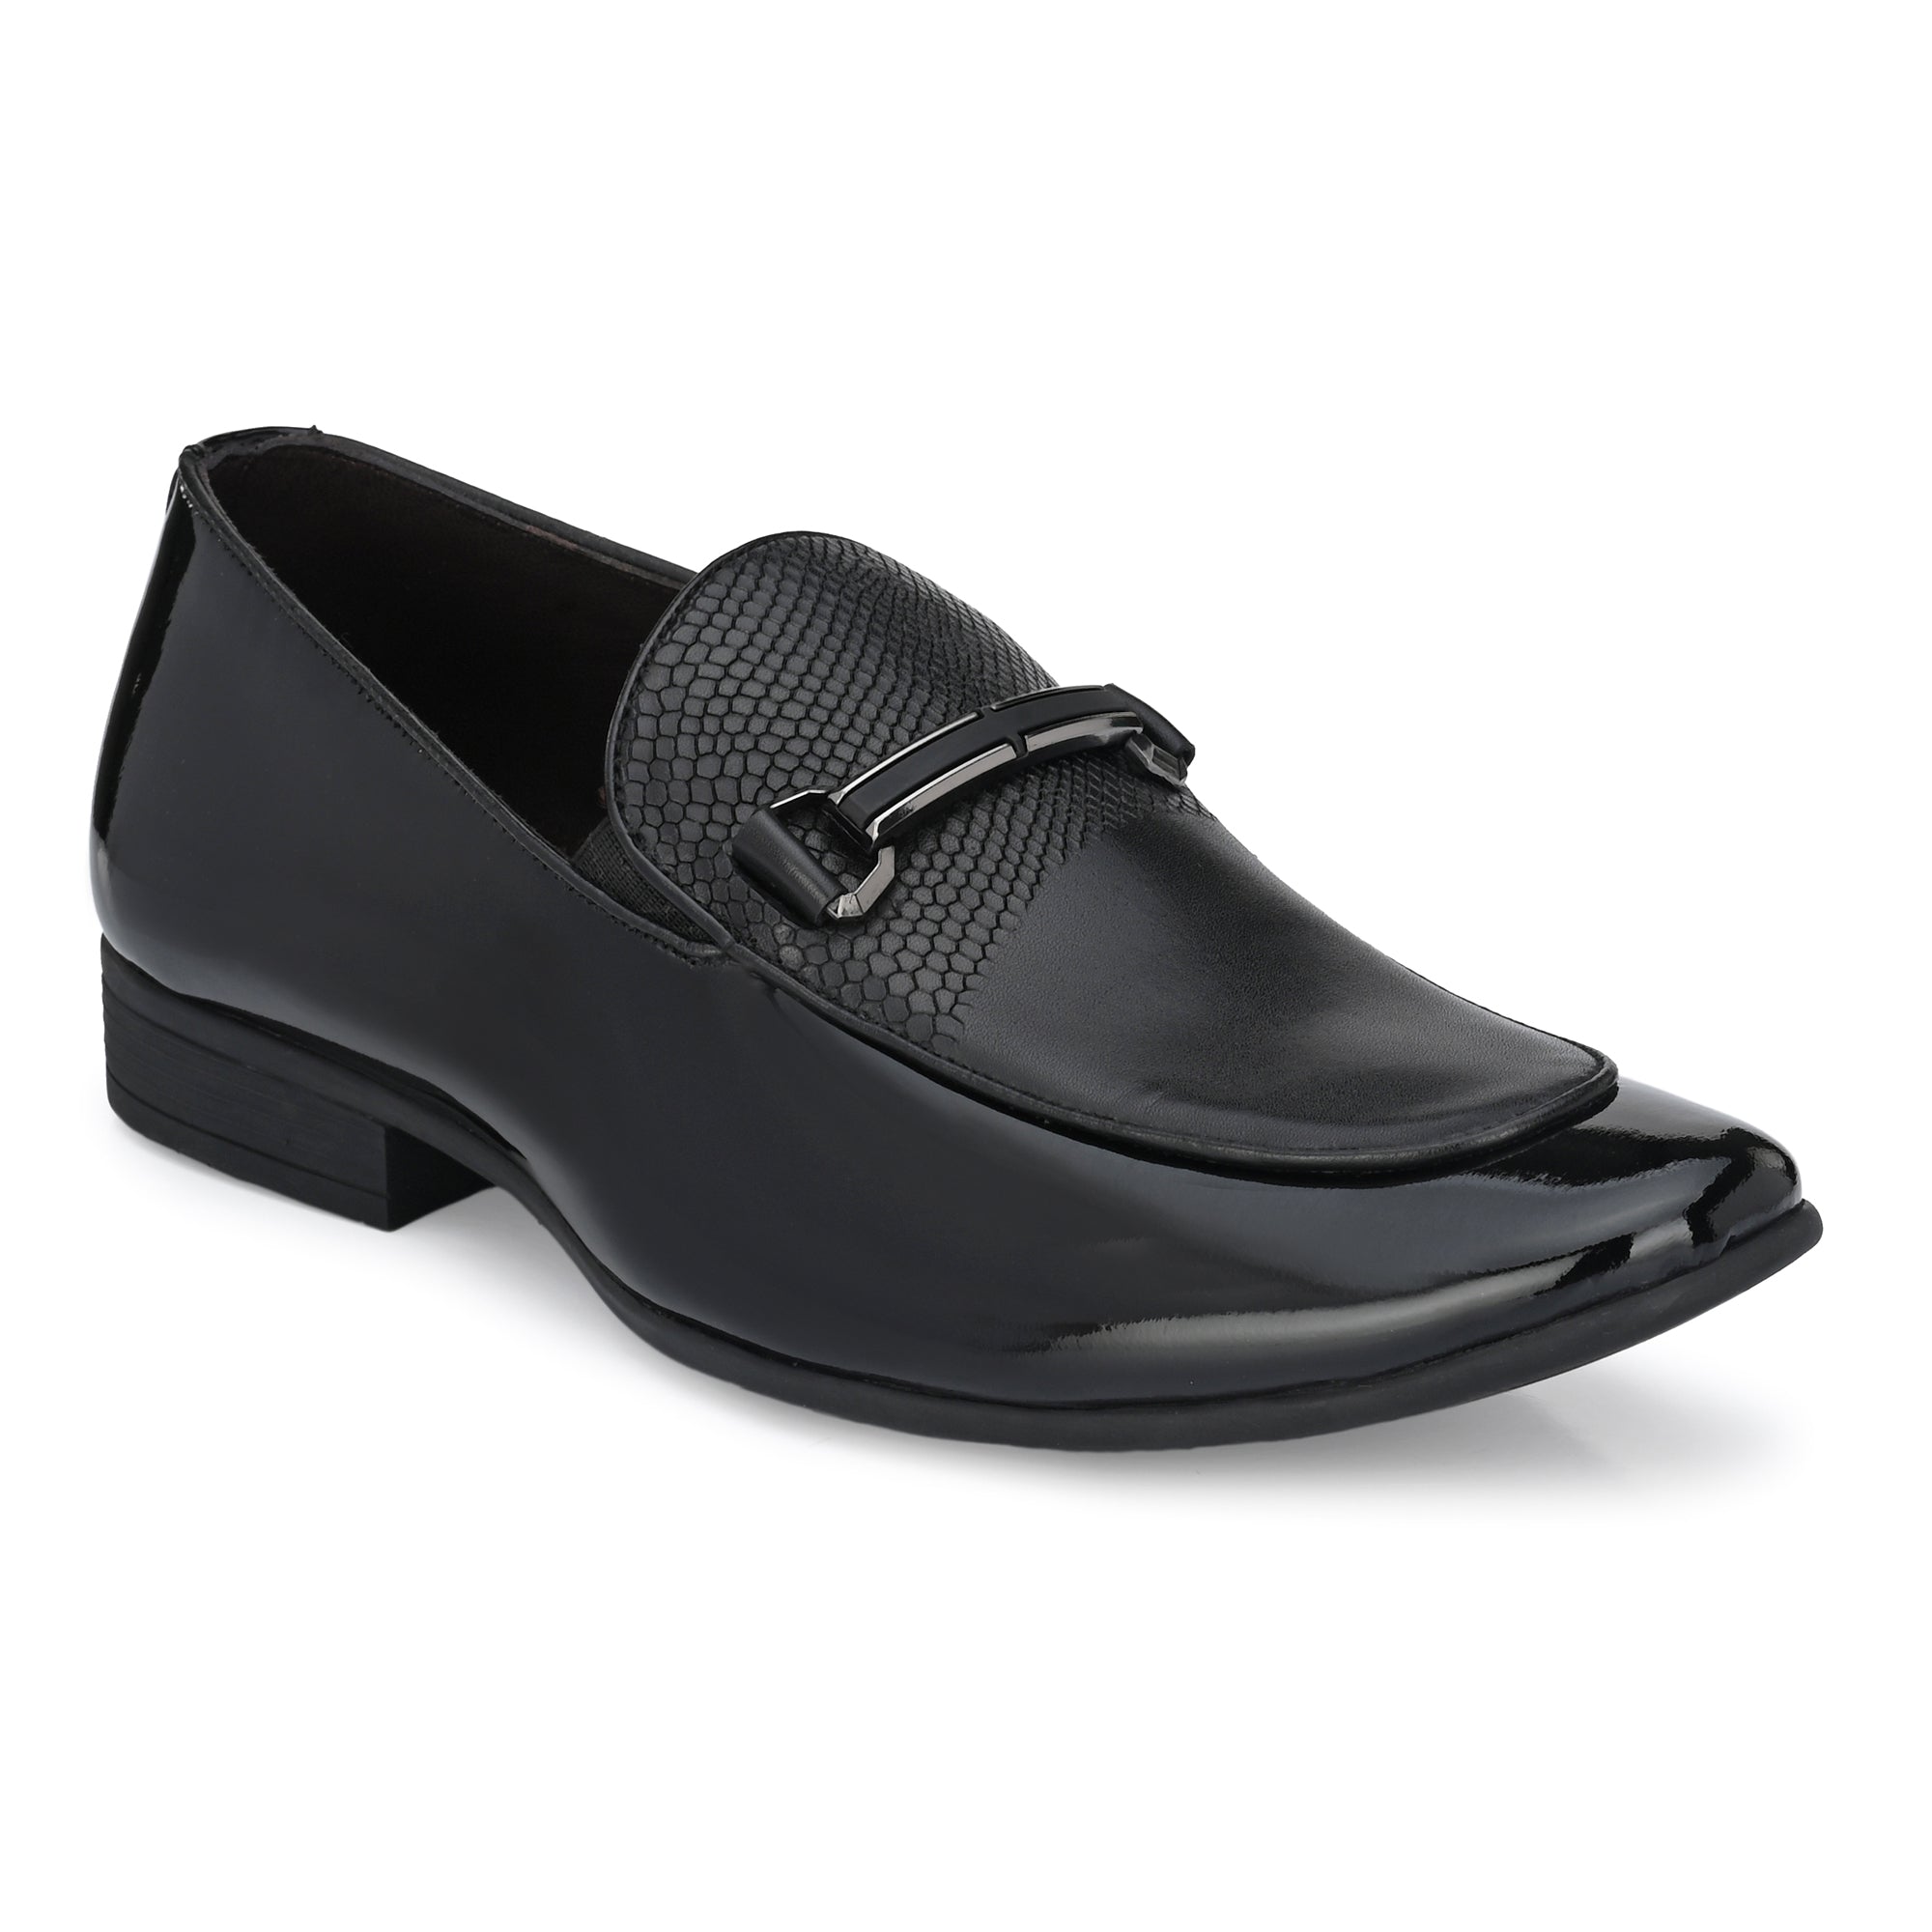 Egoss Buckled Formal Loafers Shoes For Men